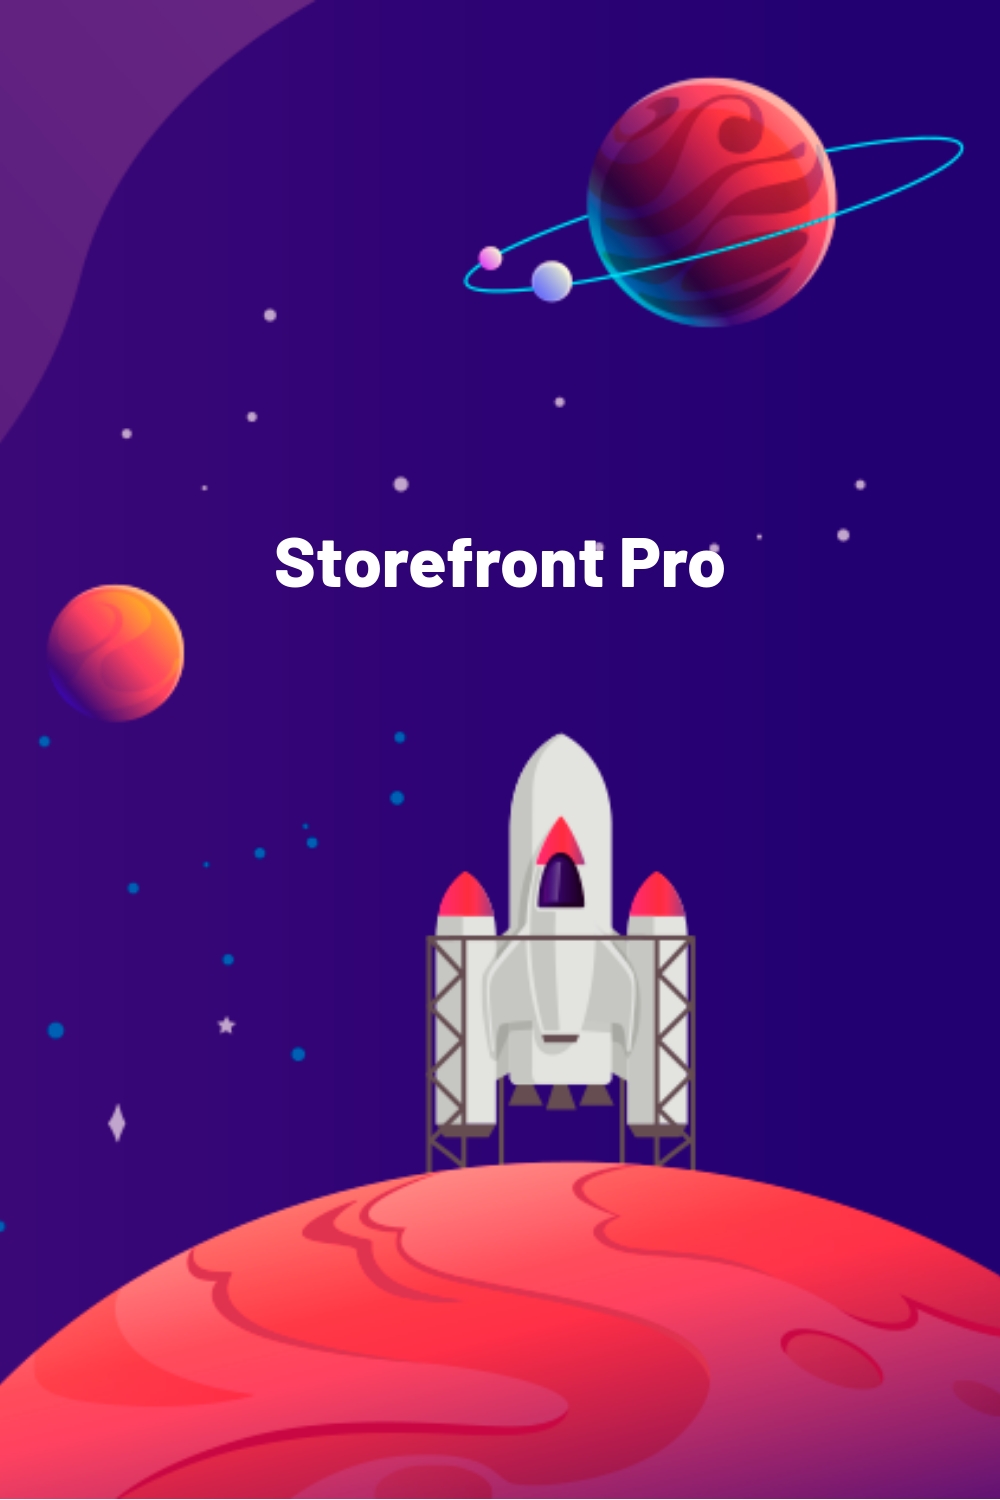 Storefront Pro